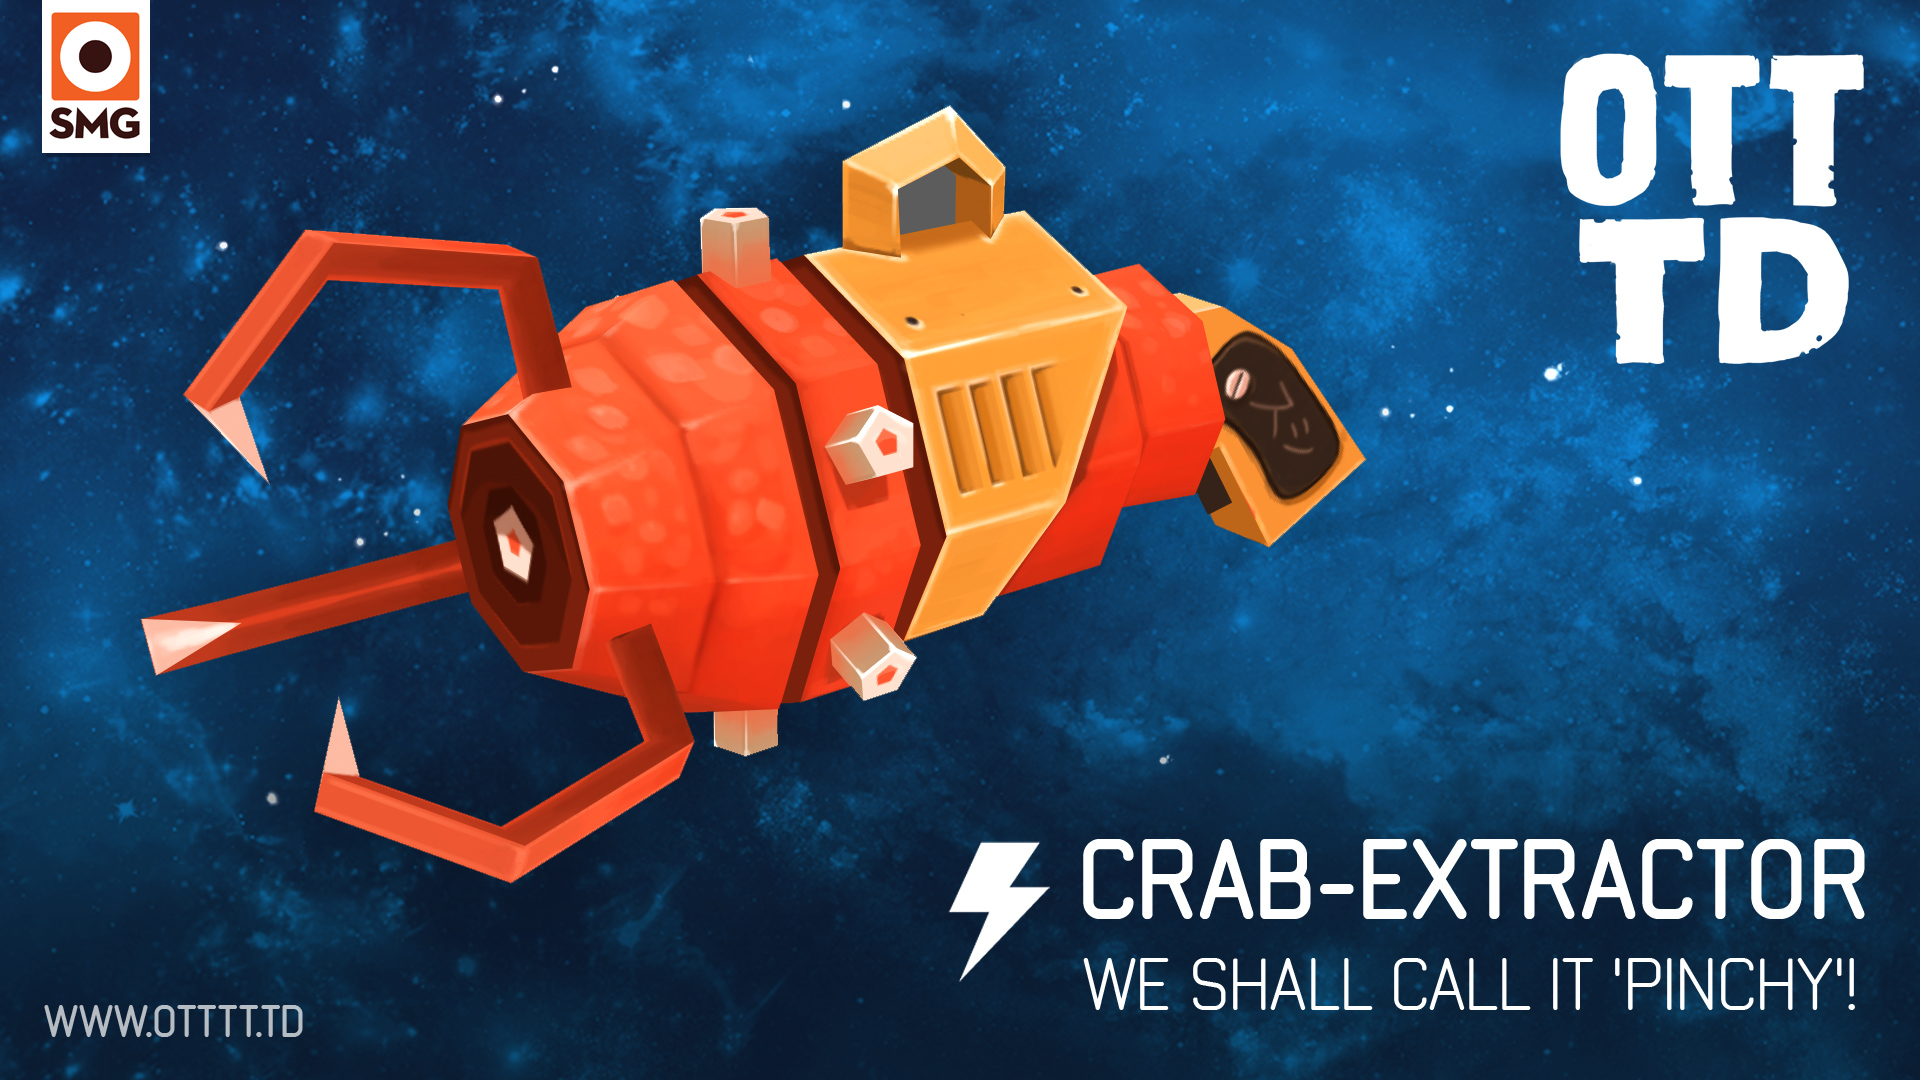 OTTTD-weapons-crab-extractor1920x1080.jpg